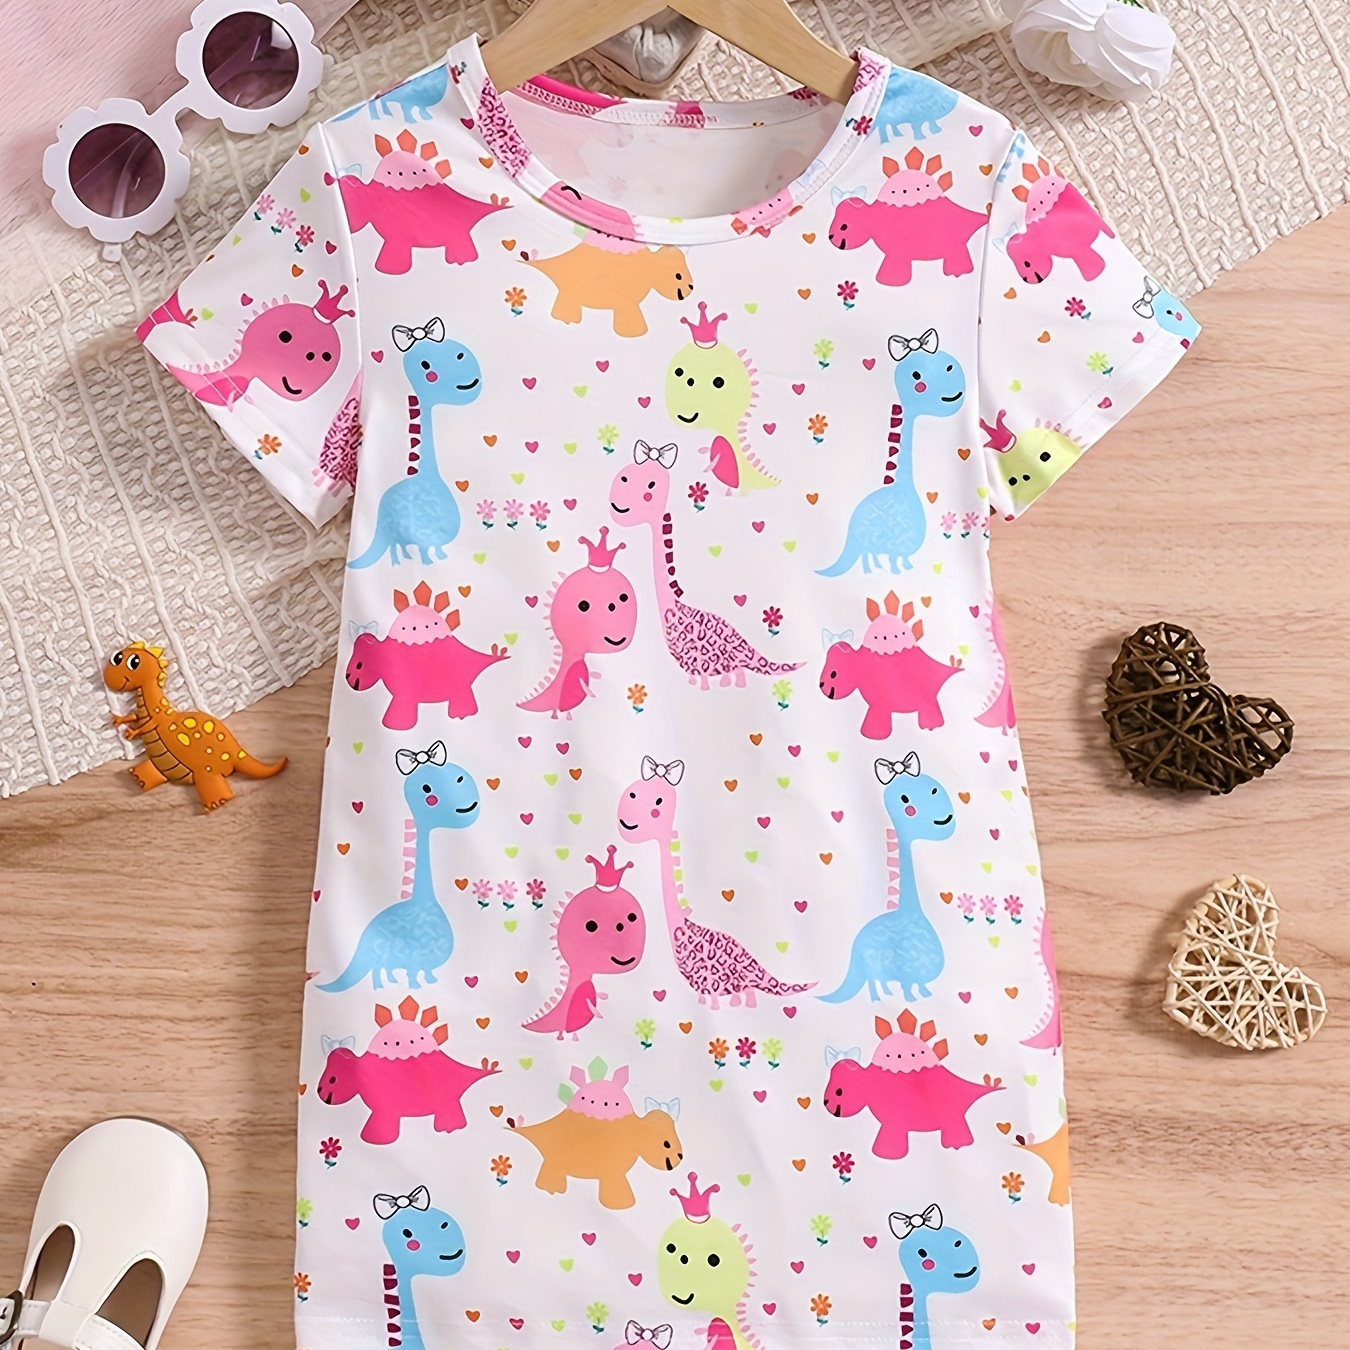 

Girls Sweet Cute Cartoon Dino Graphic Short Sleeve T-shirt Dress Summer Clothes Gift Party